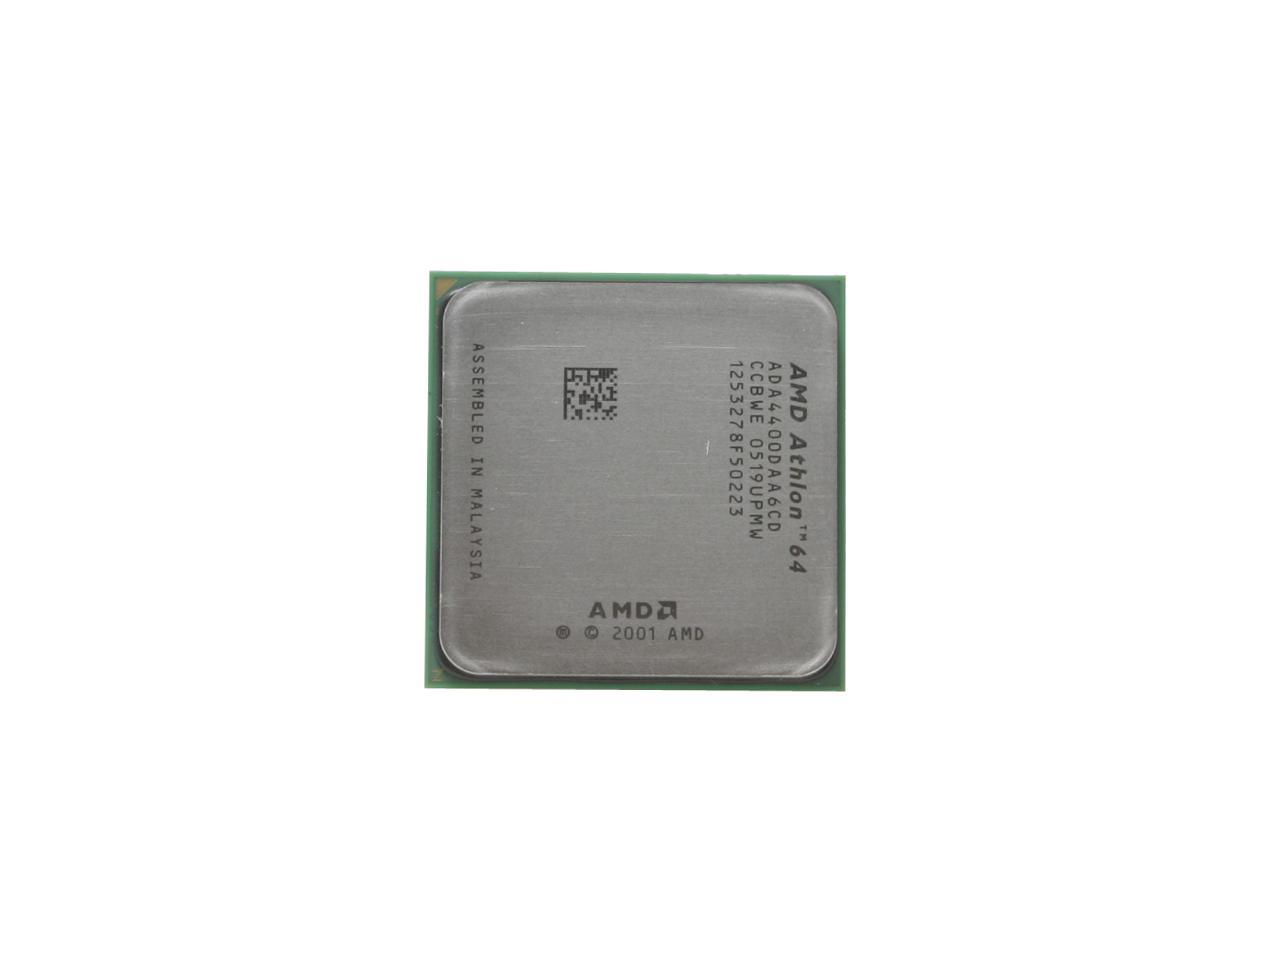 Athlon 64 4400. AMD Opteron 6128 he. AMD Athlon 64 x2 Box. AMD Athlon 64 x2 4400+ Box.